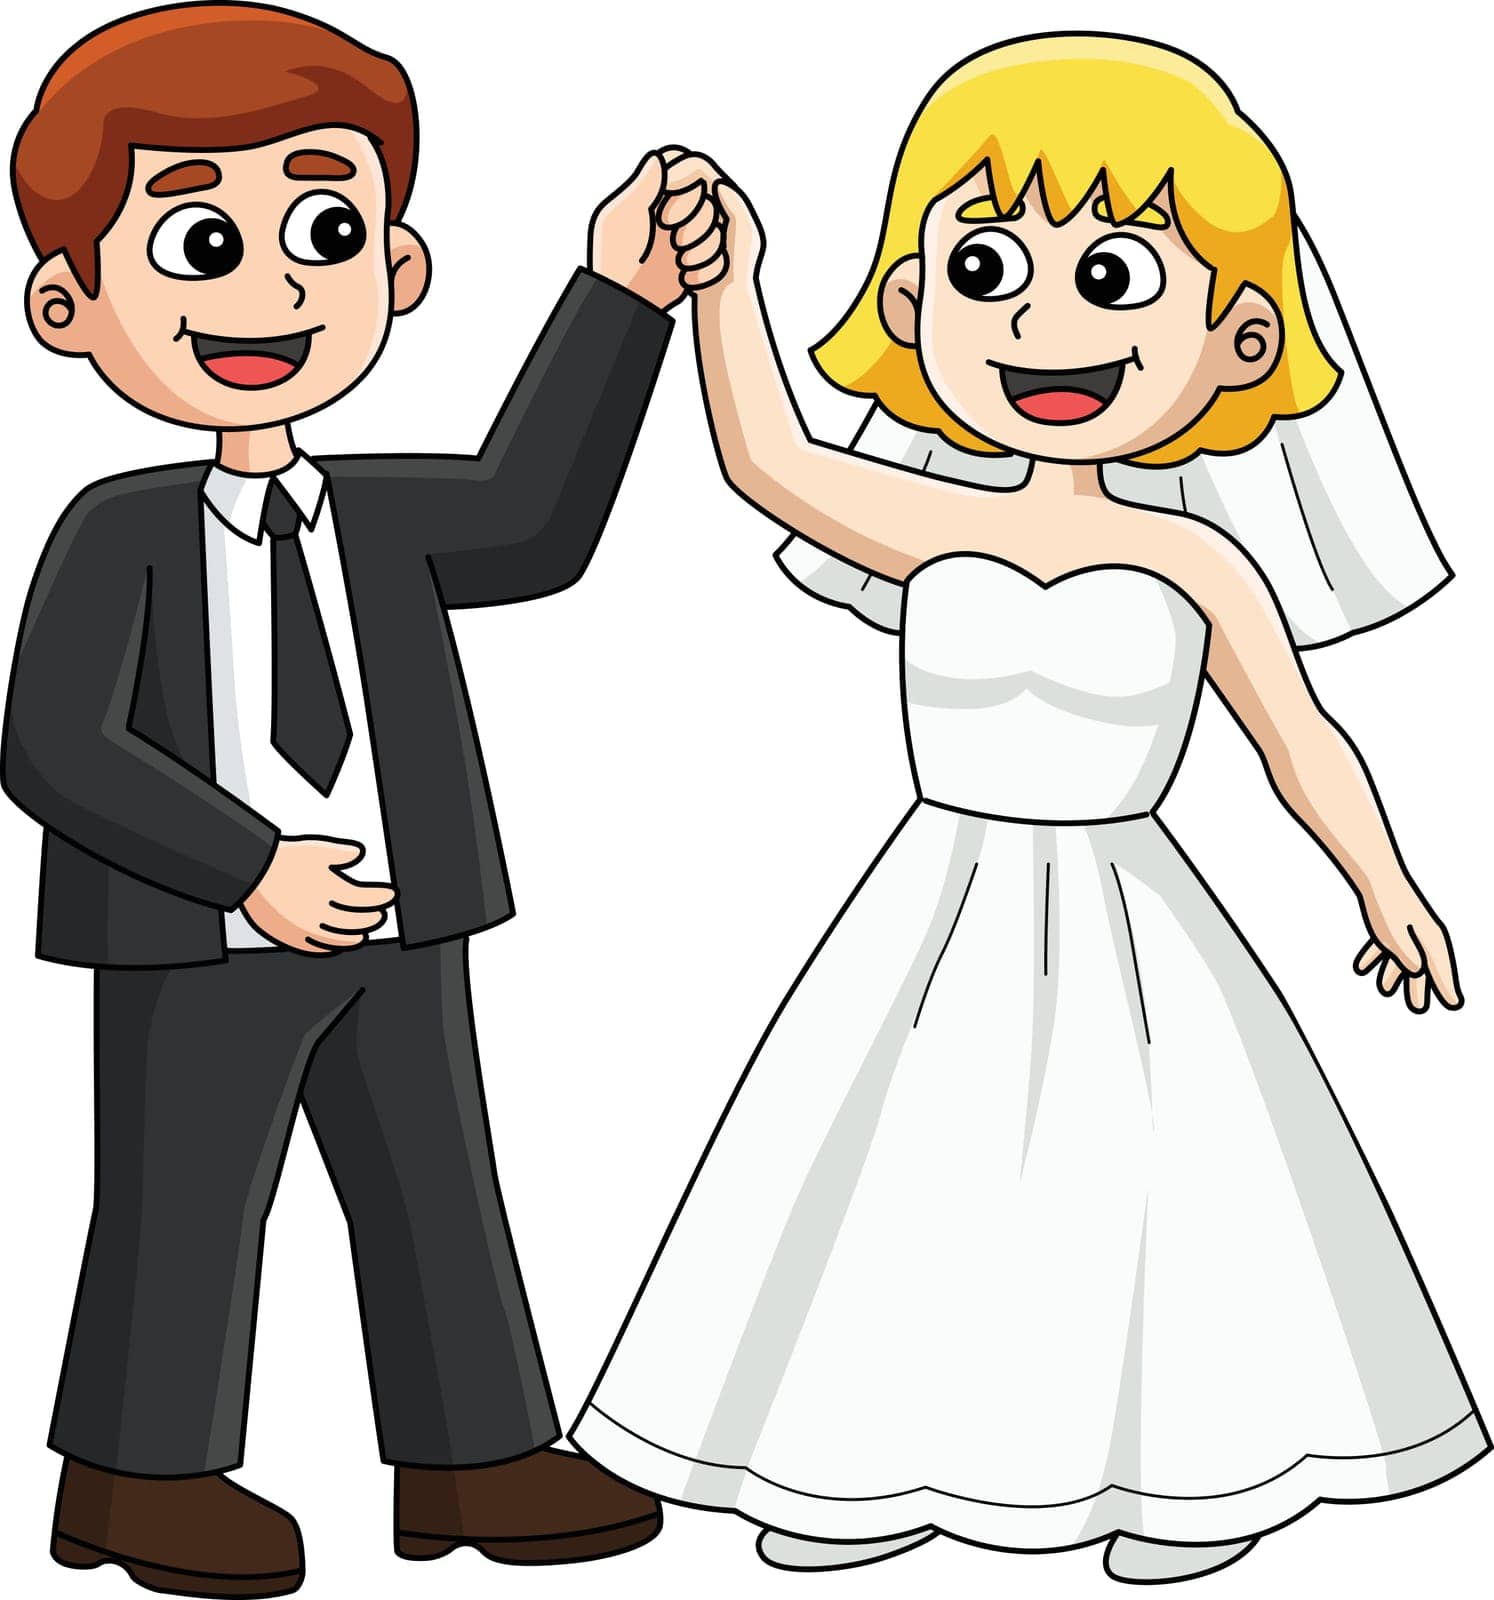 Wedding Groom And Bride Dancing Cartoon Clipart by abbydesign